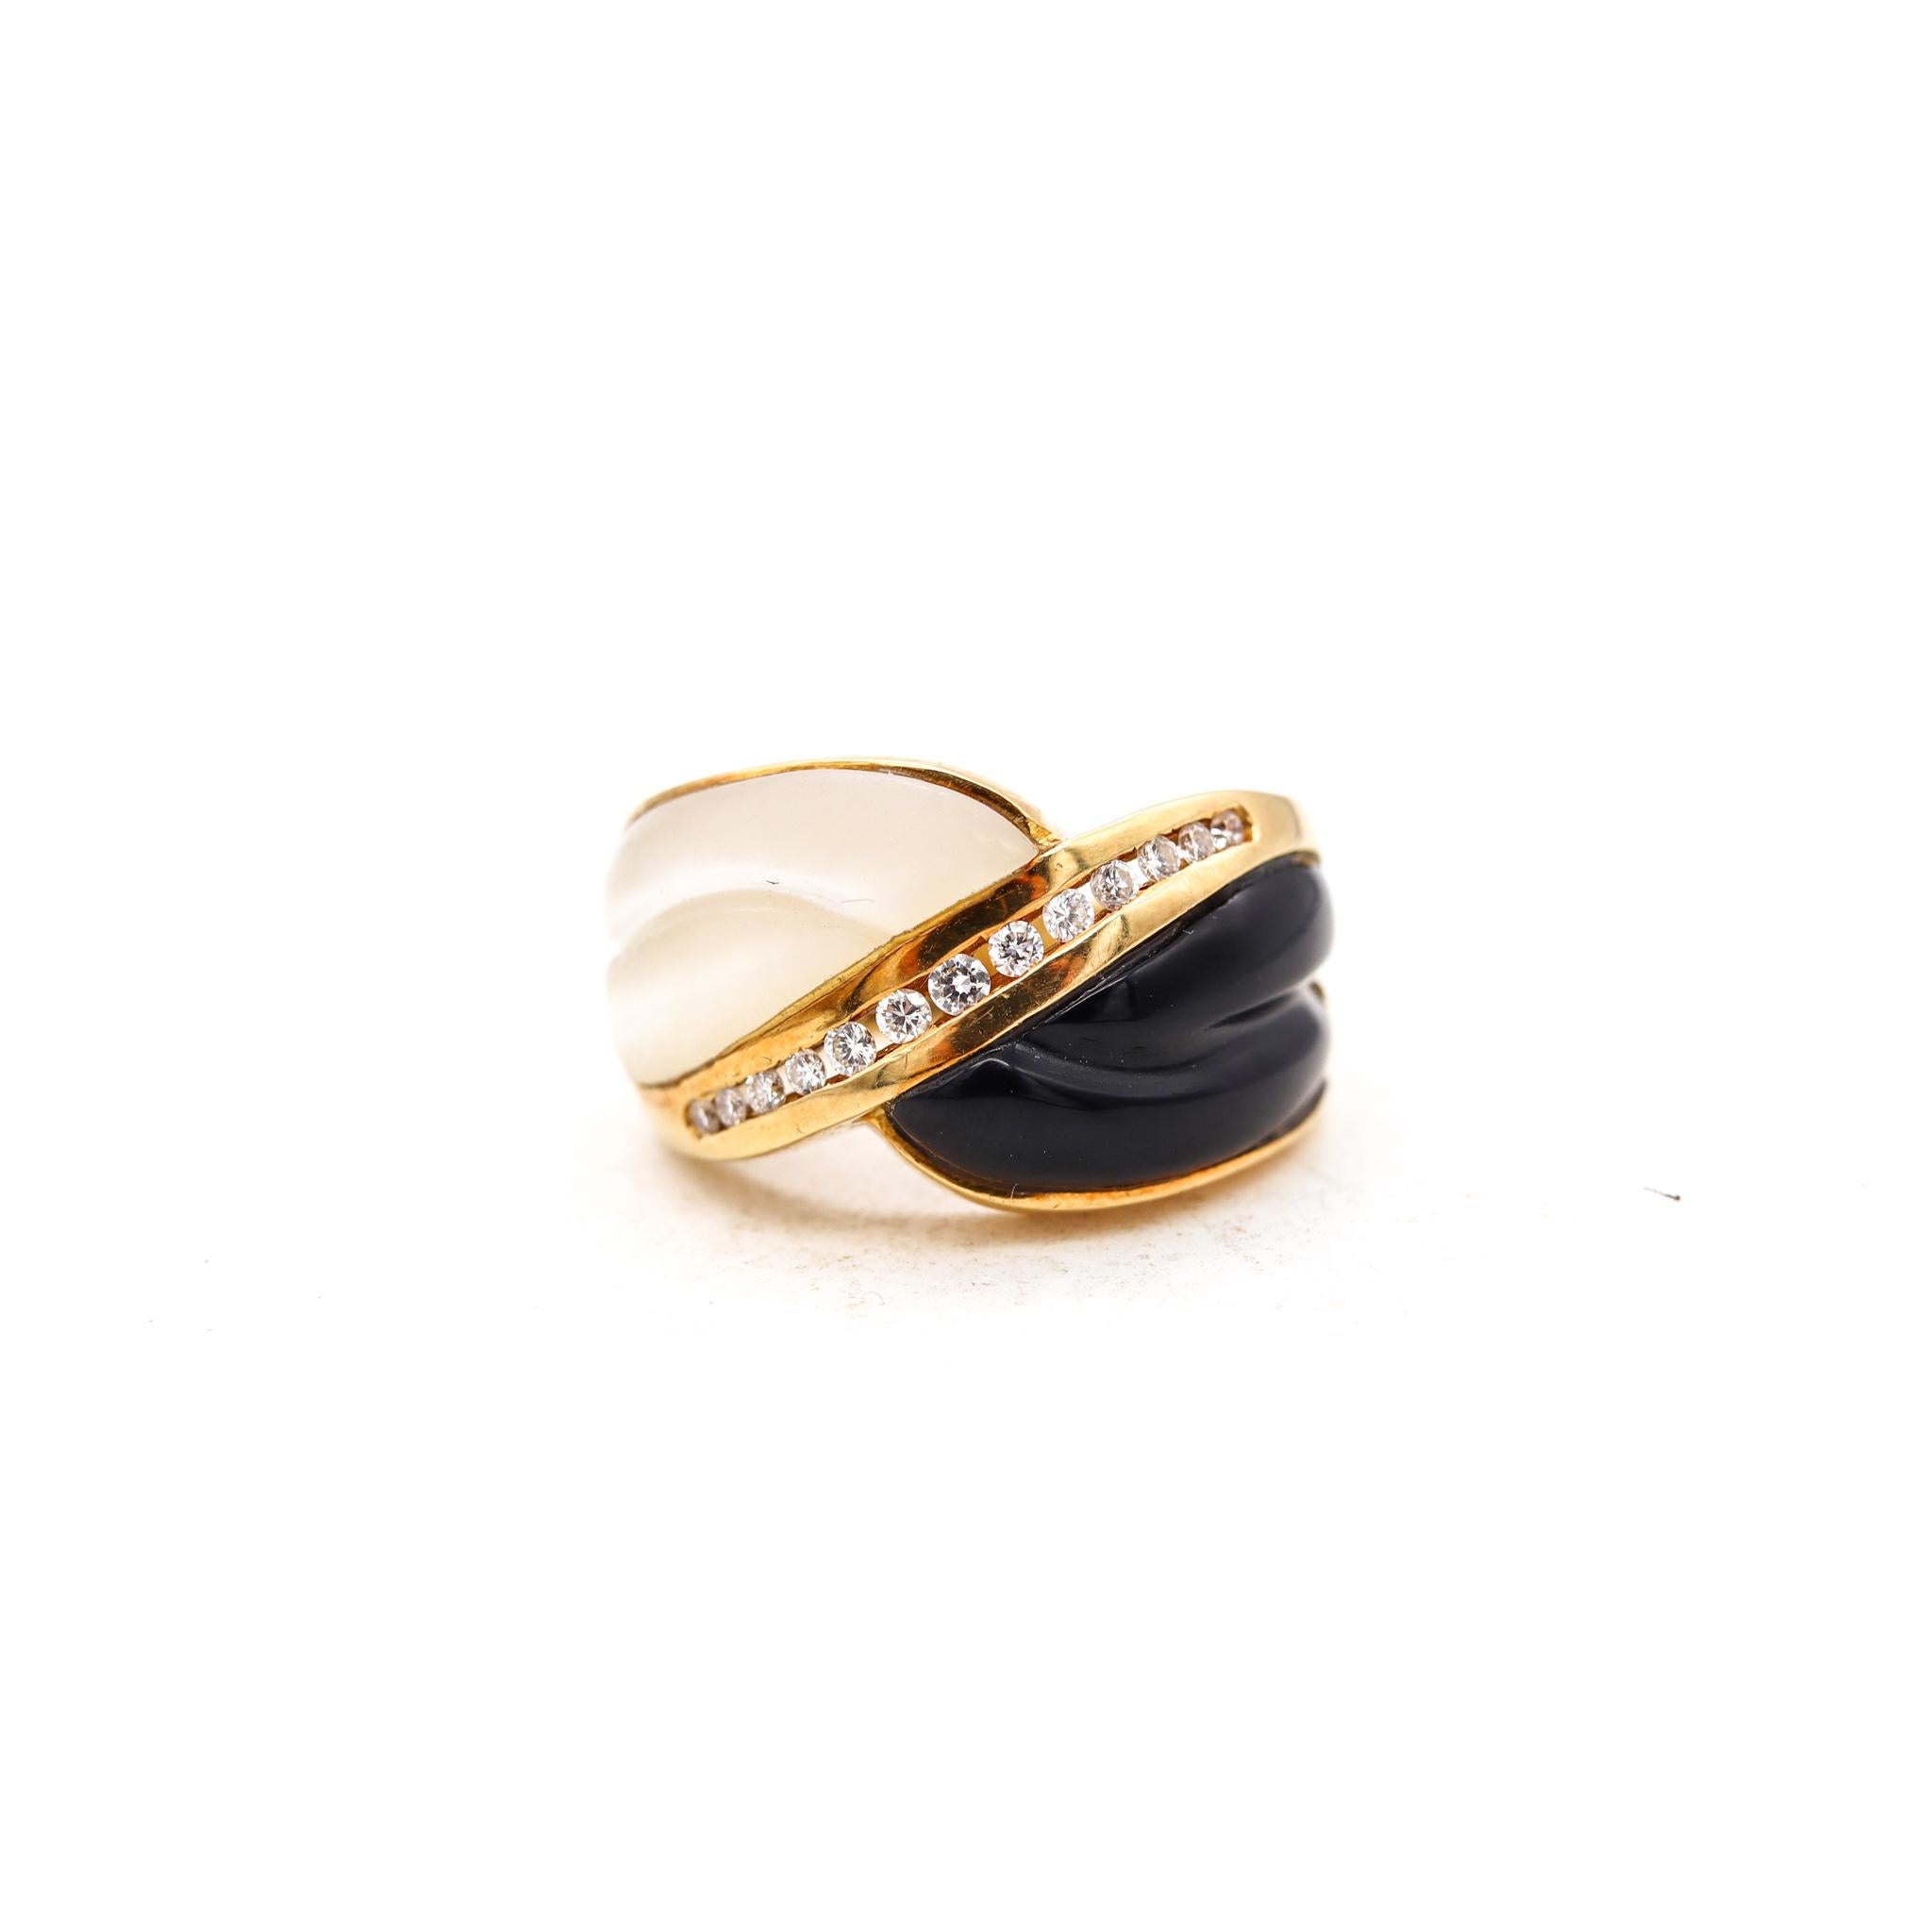 Denoir Paris Gem Set Ring 18Kt Yellow Gold With VS Diamonds Onyx And White Nacre For Sale 1